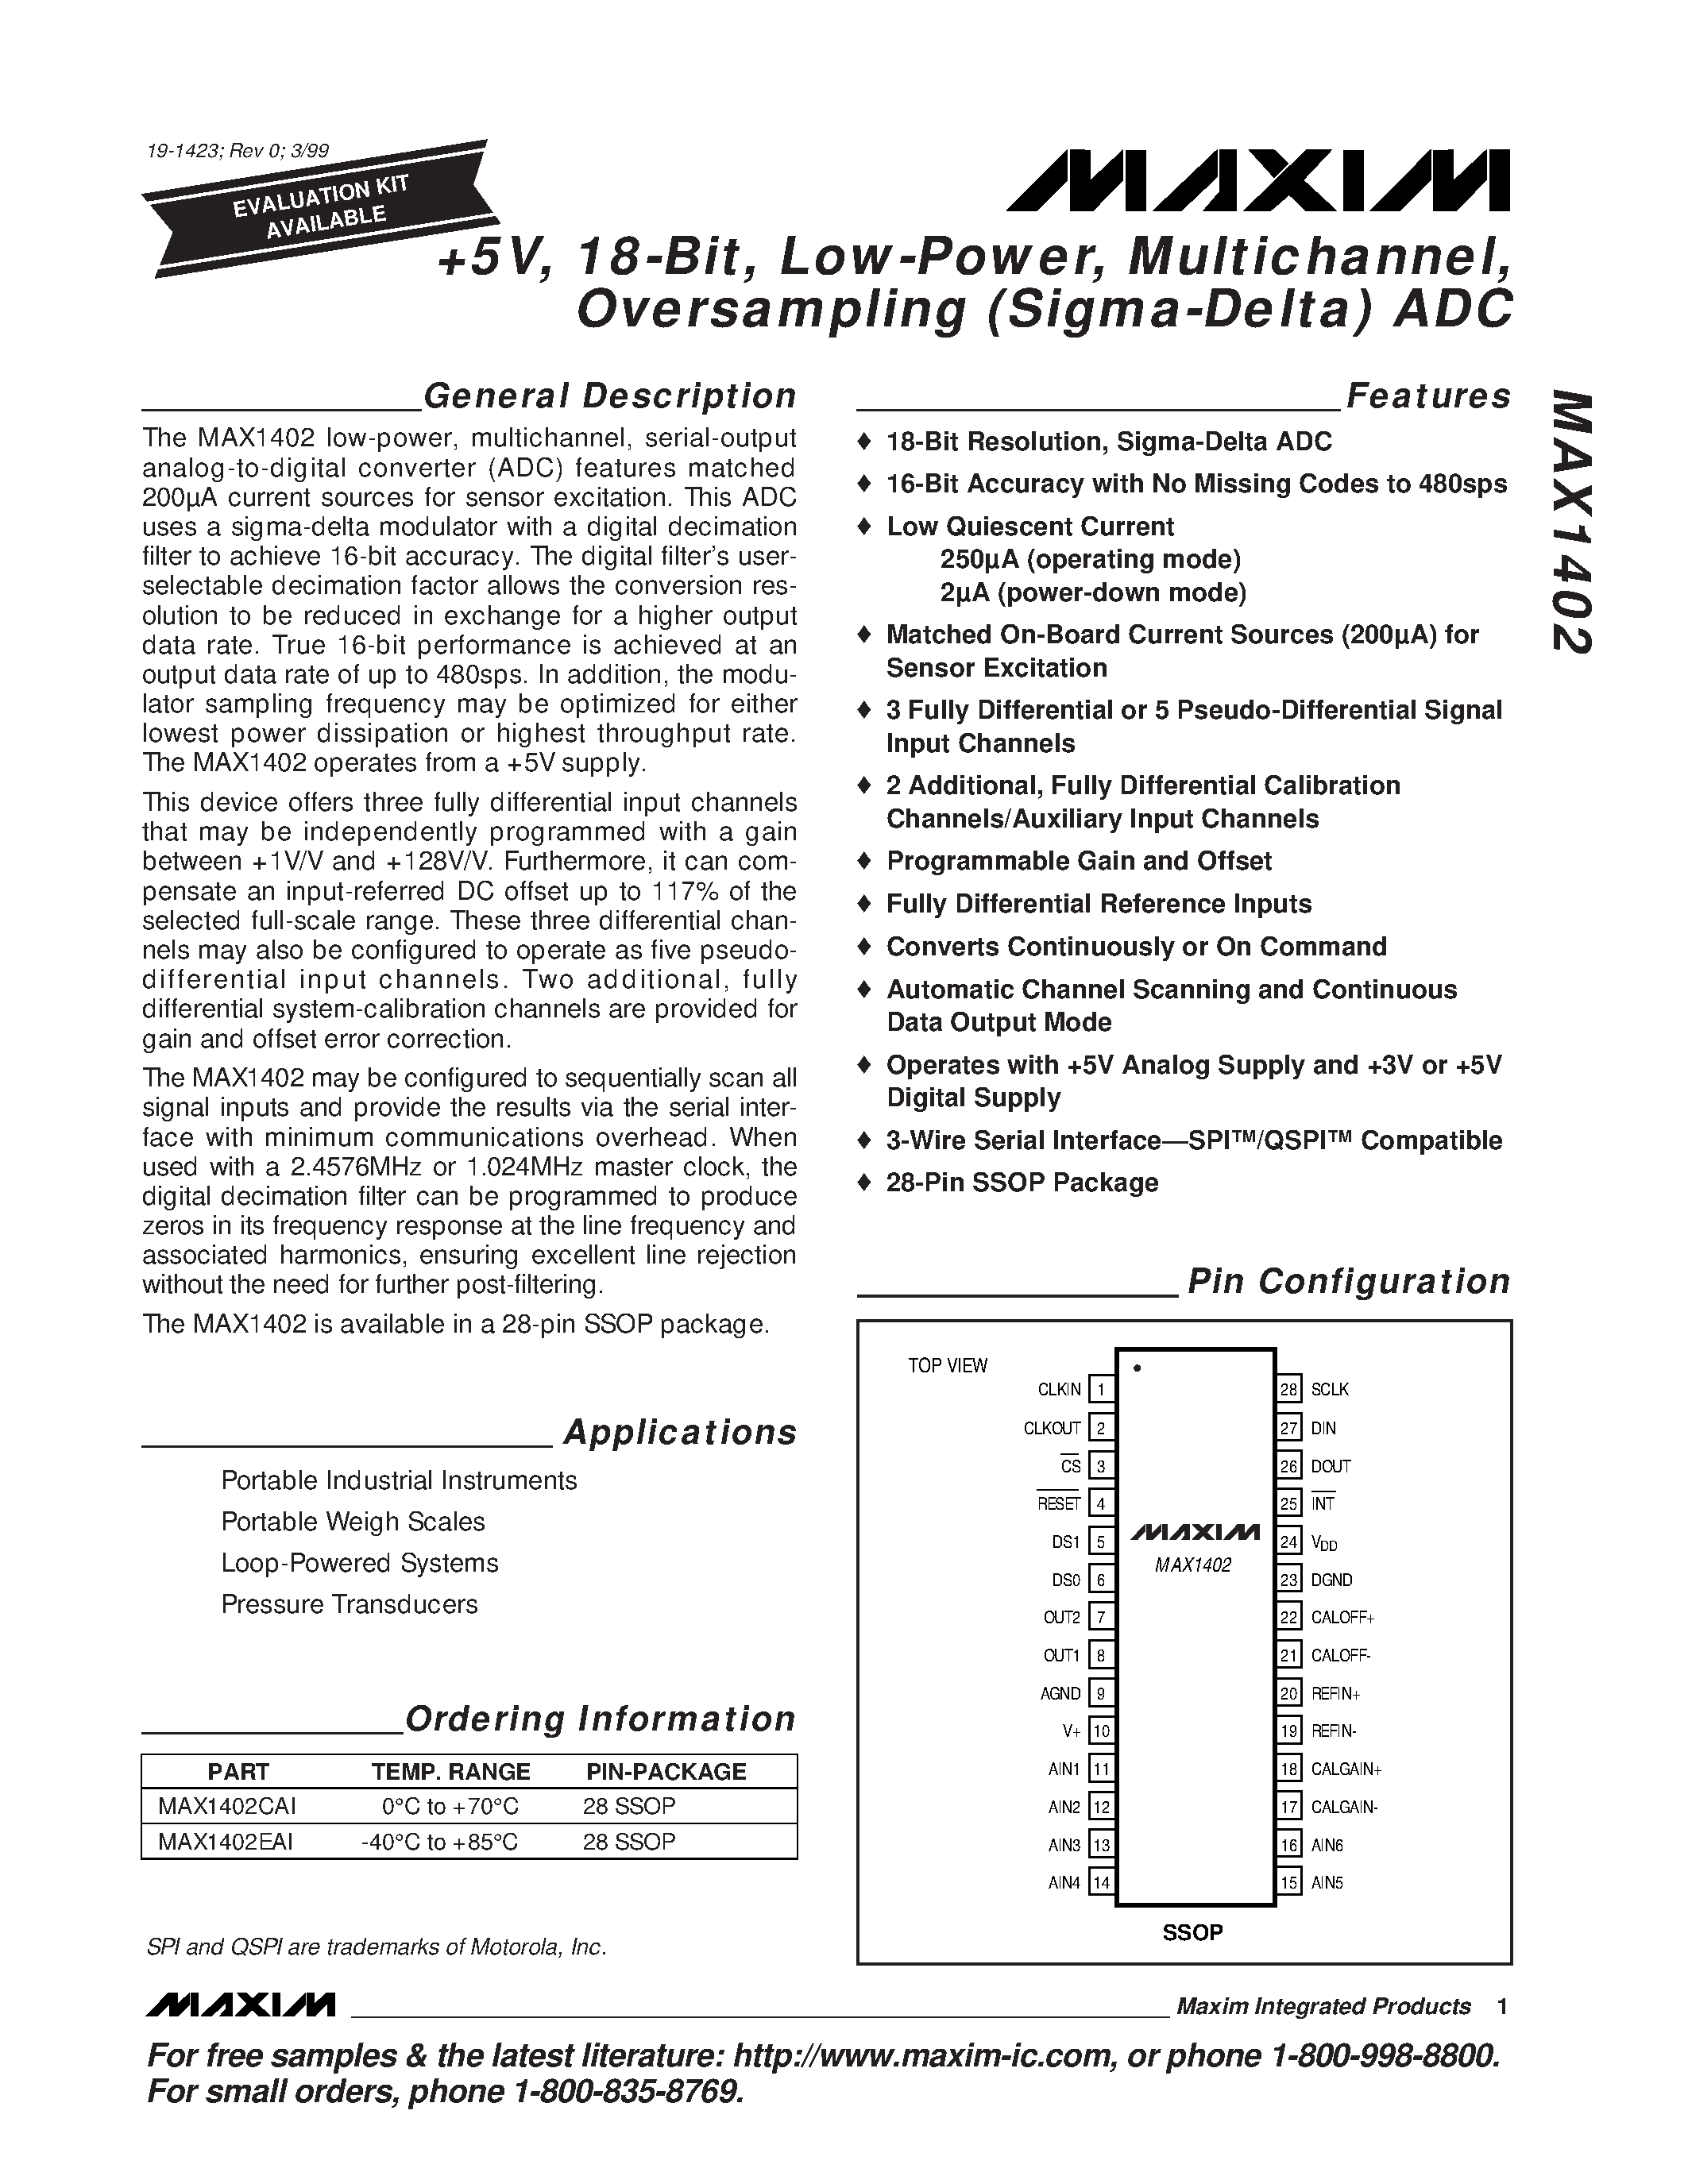 Даташит MAX1402EAI - +5V / 18-Bit / Low-Power / Multichannel / Oversampling Sigma-Delta ADC страница 1